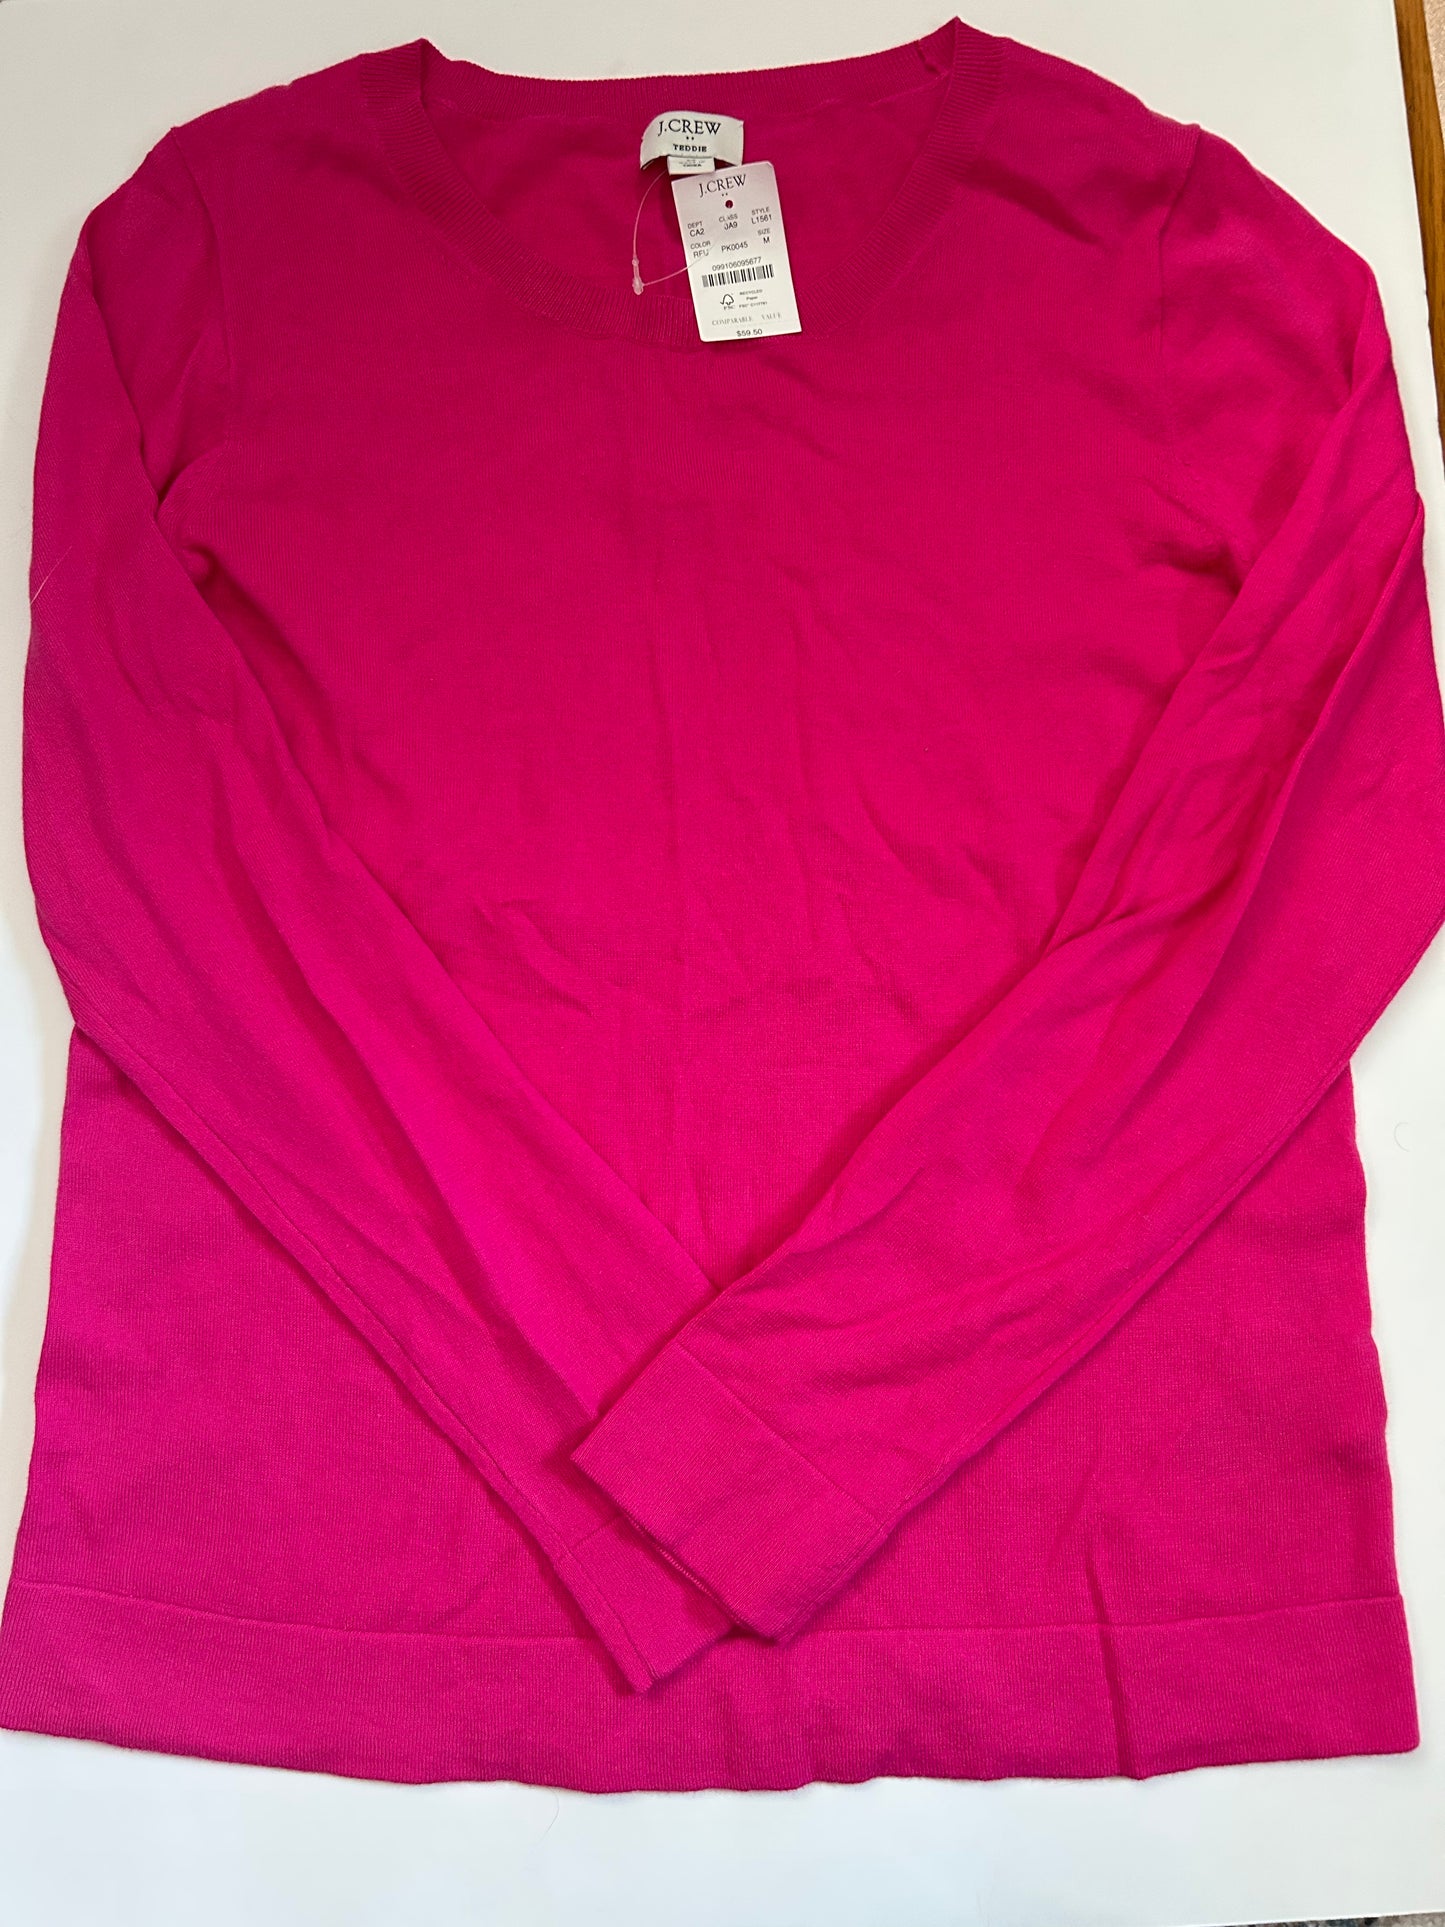 REDUCED NWT J.Crew lightweight bright pink “Teddie” sweater size M 45227